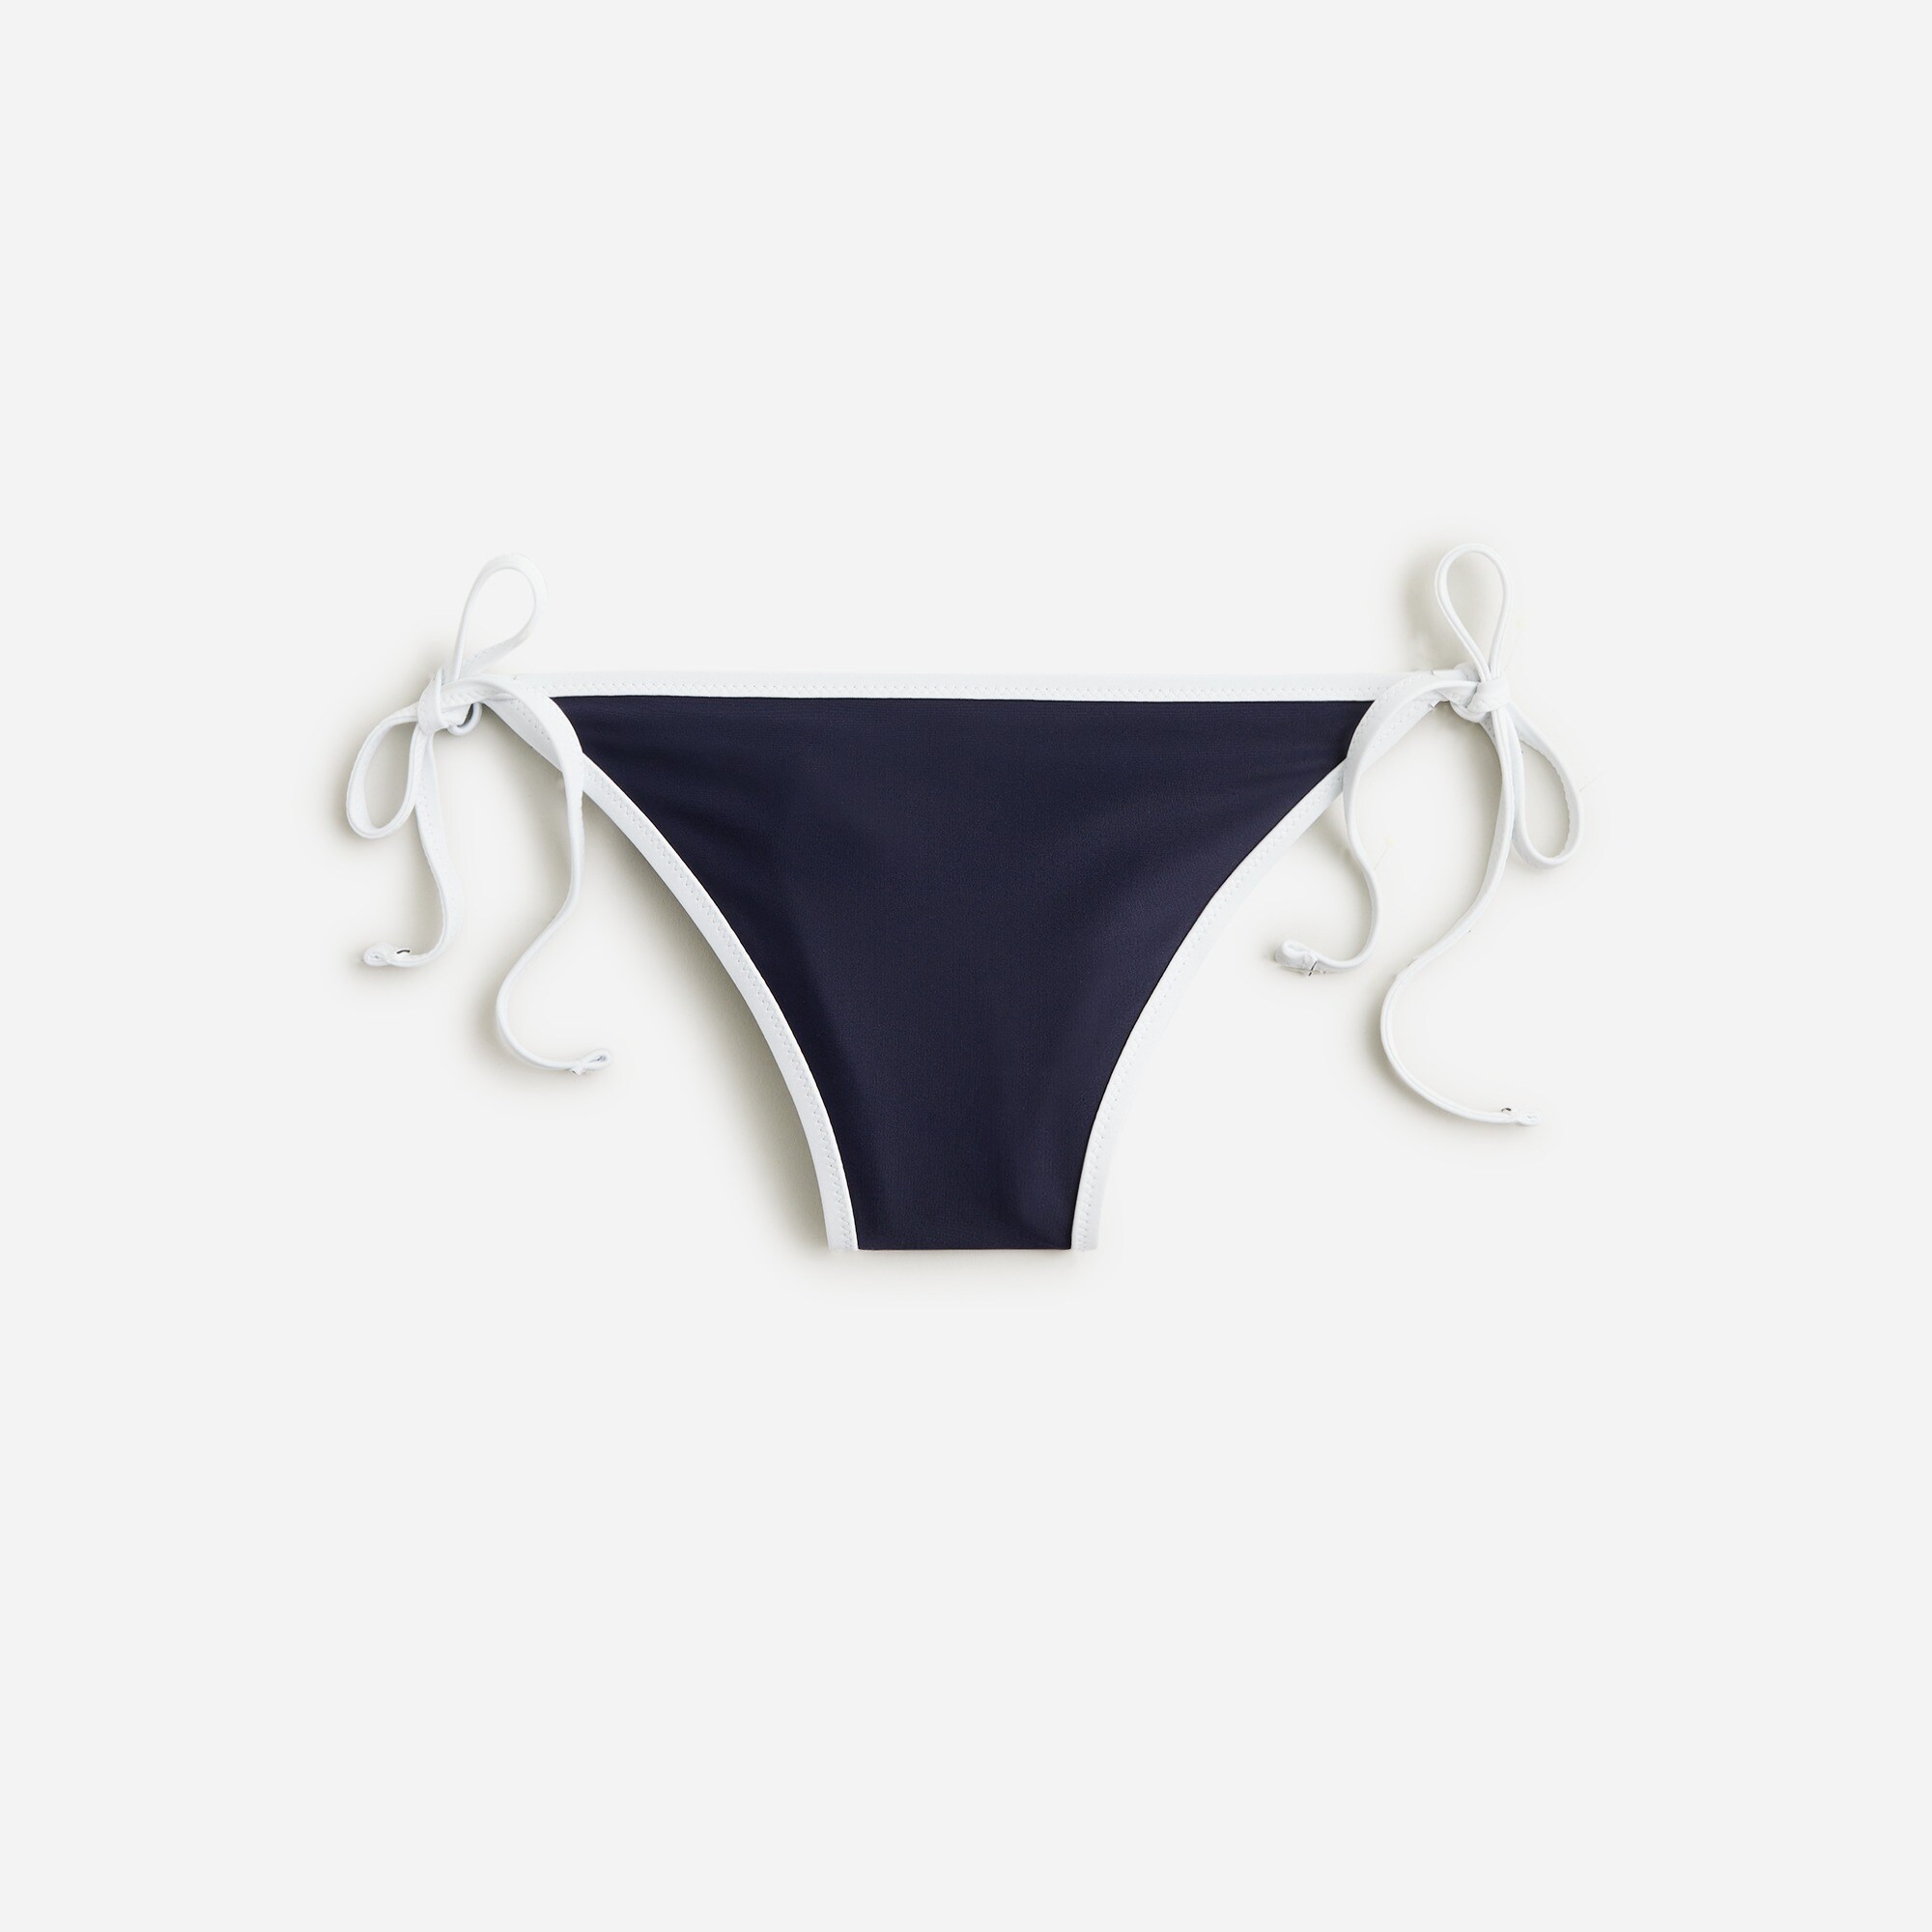  String hipster bikini bottom with contrast trim